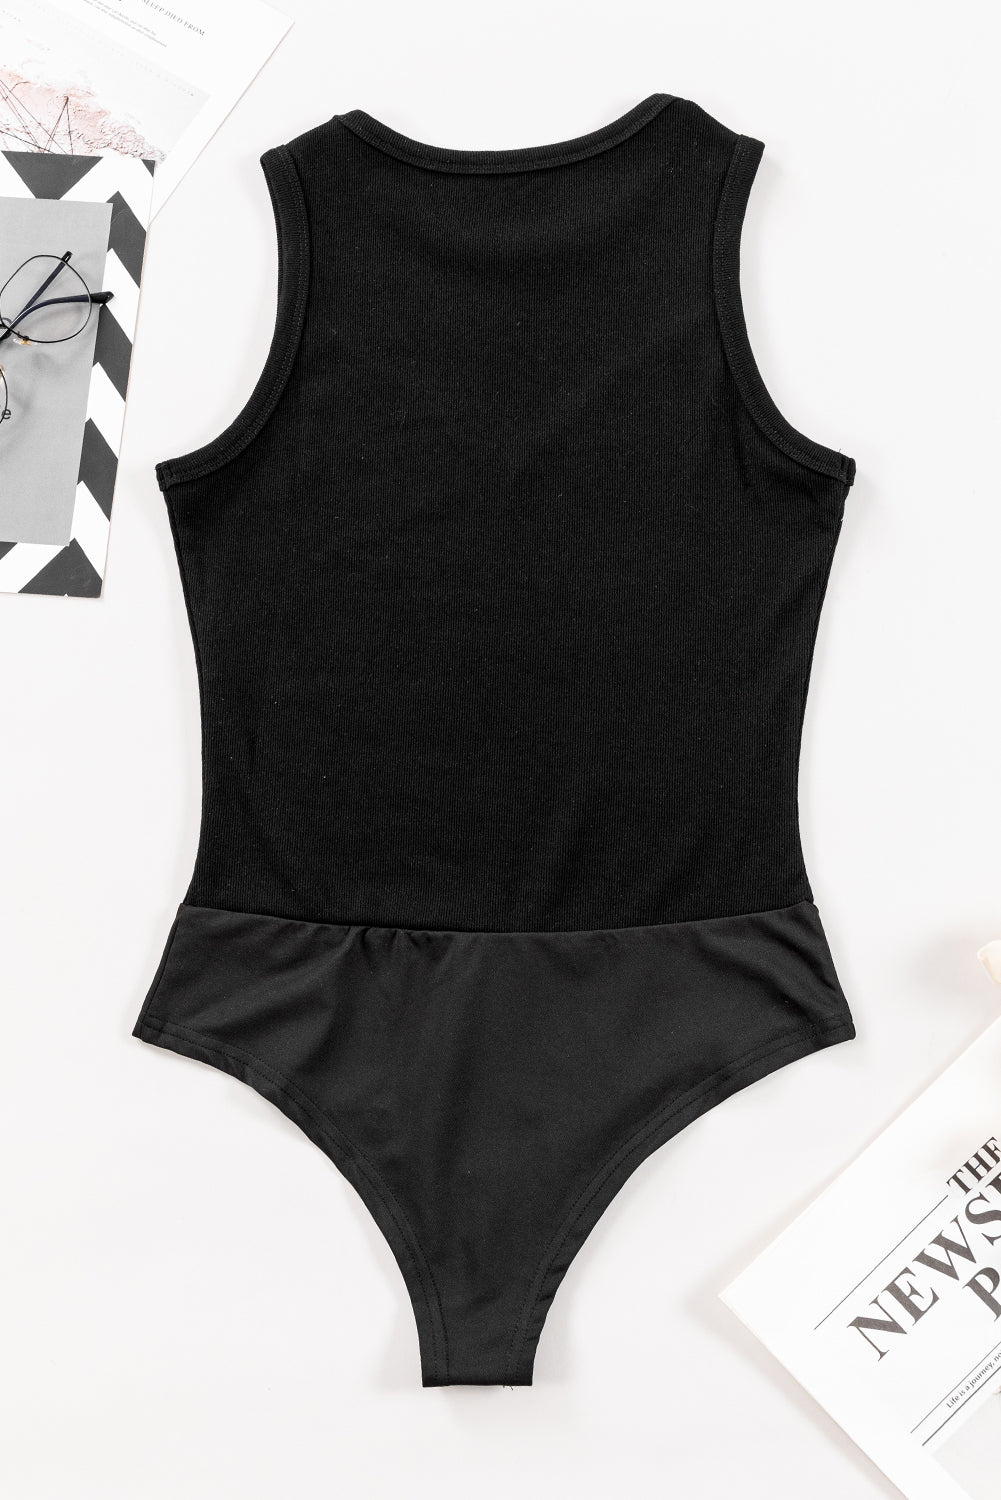 TEEK - Black Round Neck Sleeveless Bodysuit TOPS TEEK Trend   